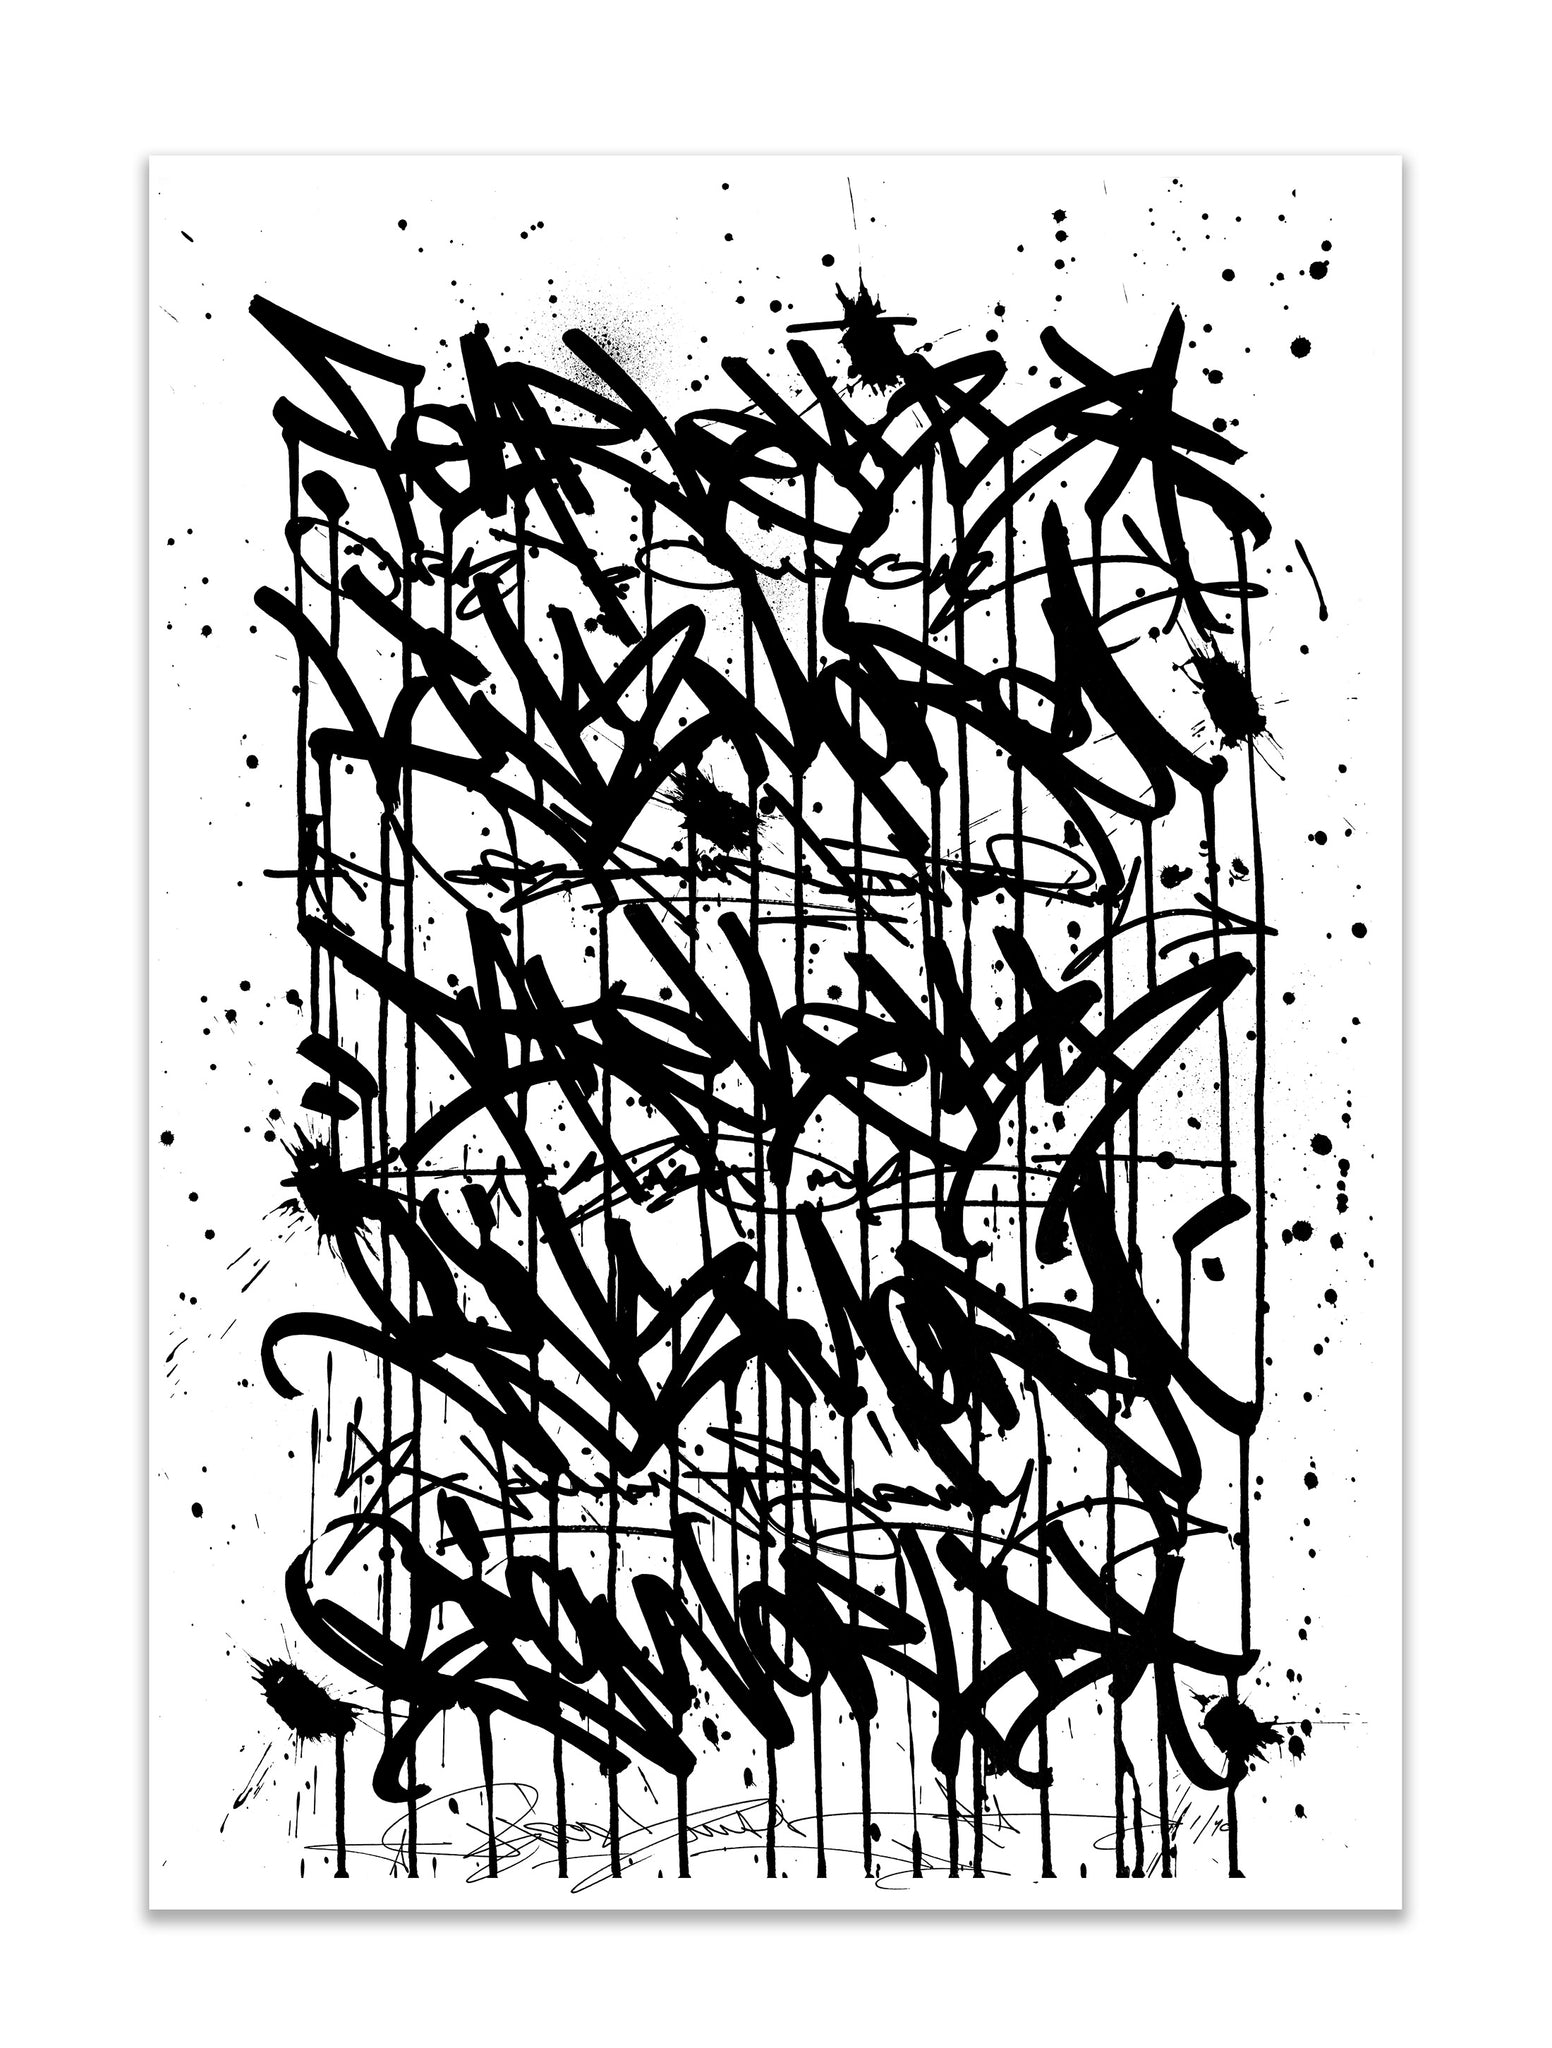 Fear Less Live More - Screenprint on paper 50 x 70 cm